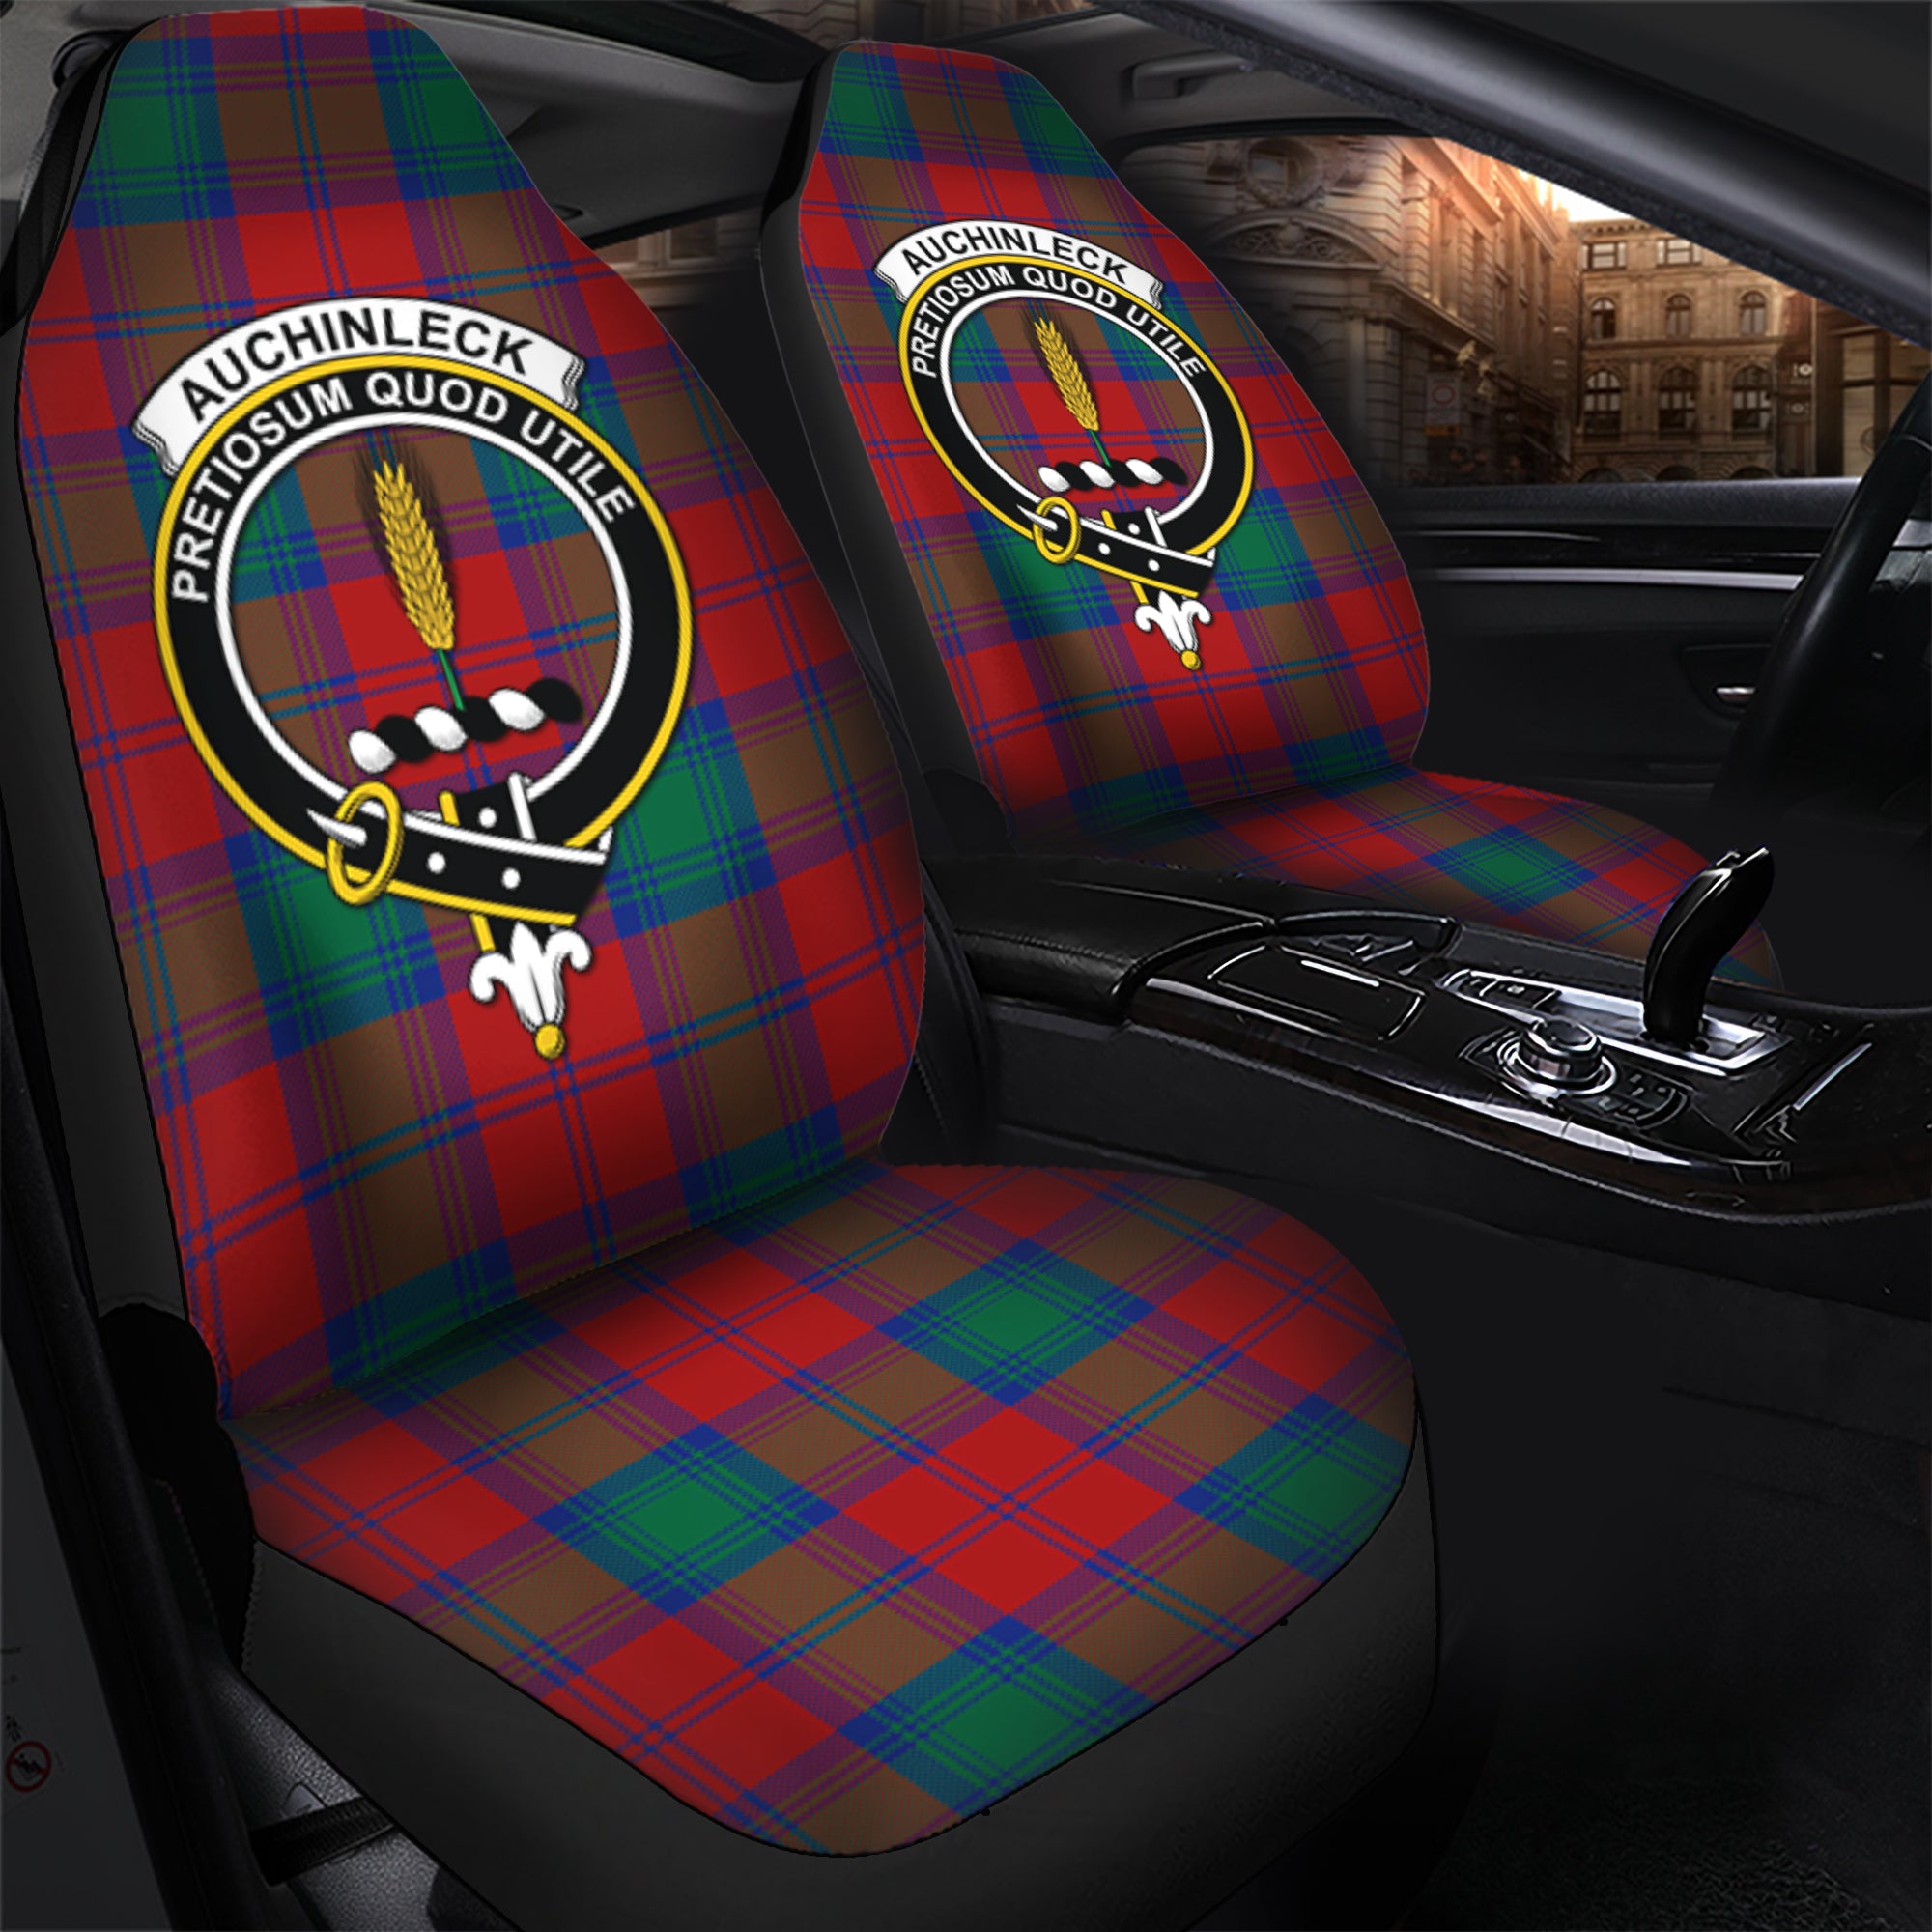 Auchinleck Clan Tartan Car Seat Cover, Family Crest Tartan Seat Cover TS23